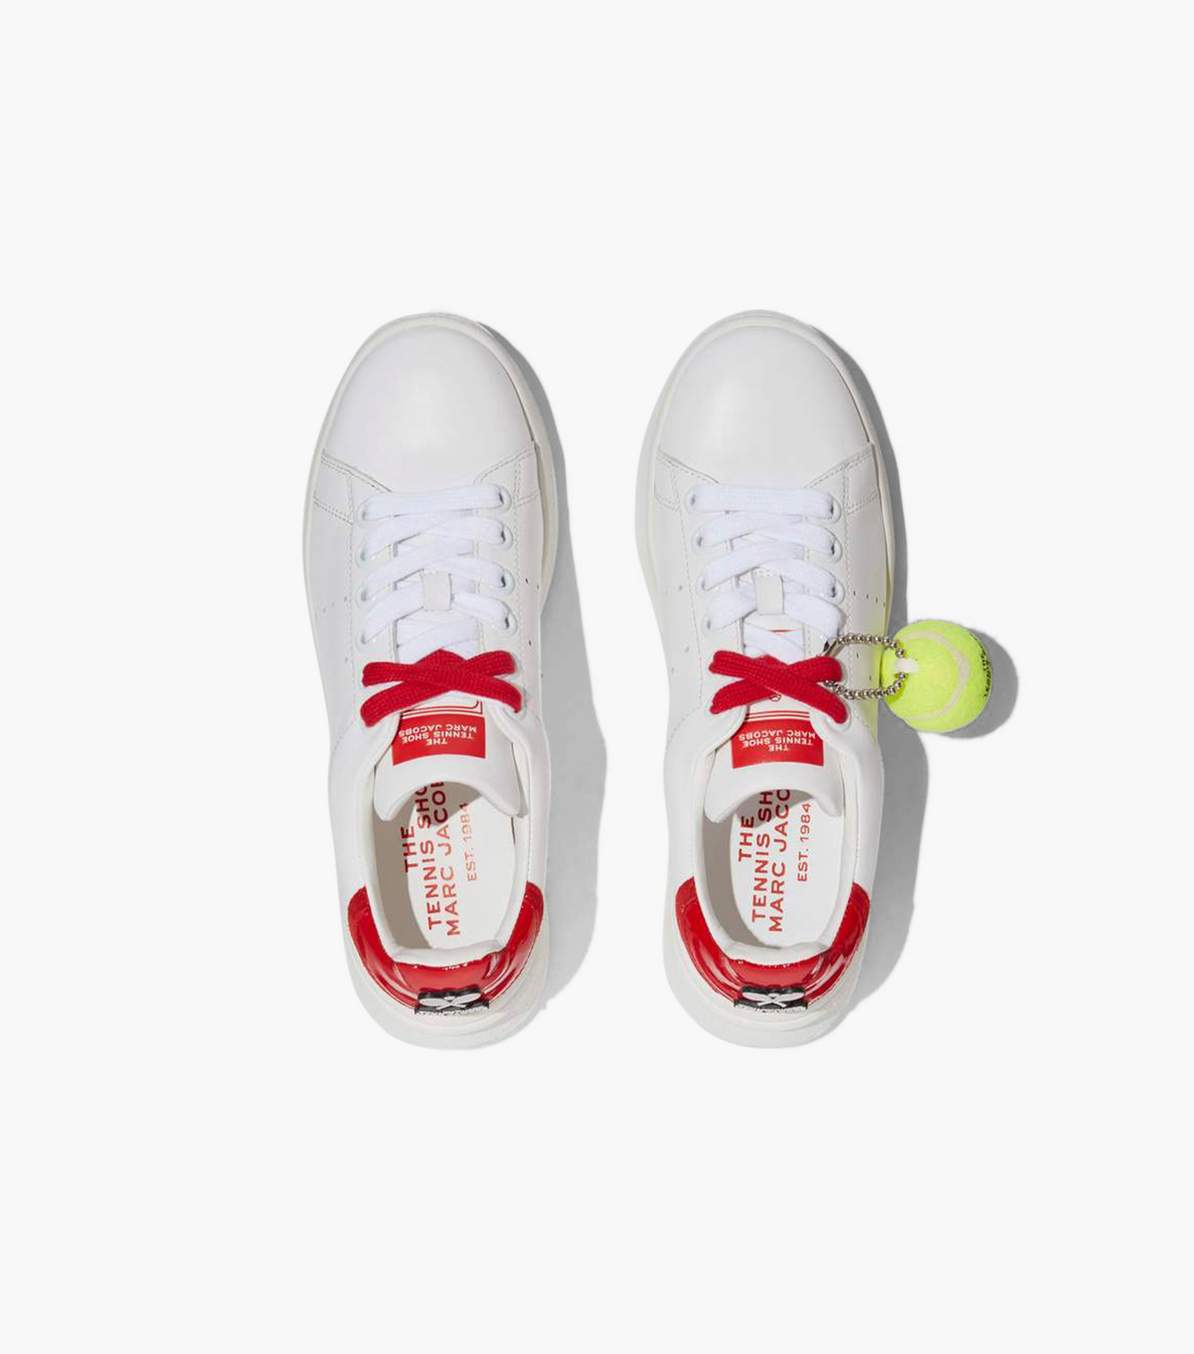 The Tennis Shoe | Marc Jacobs | Official Site